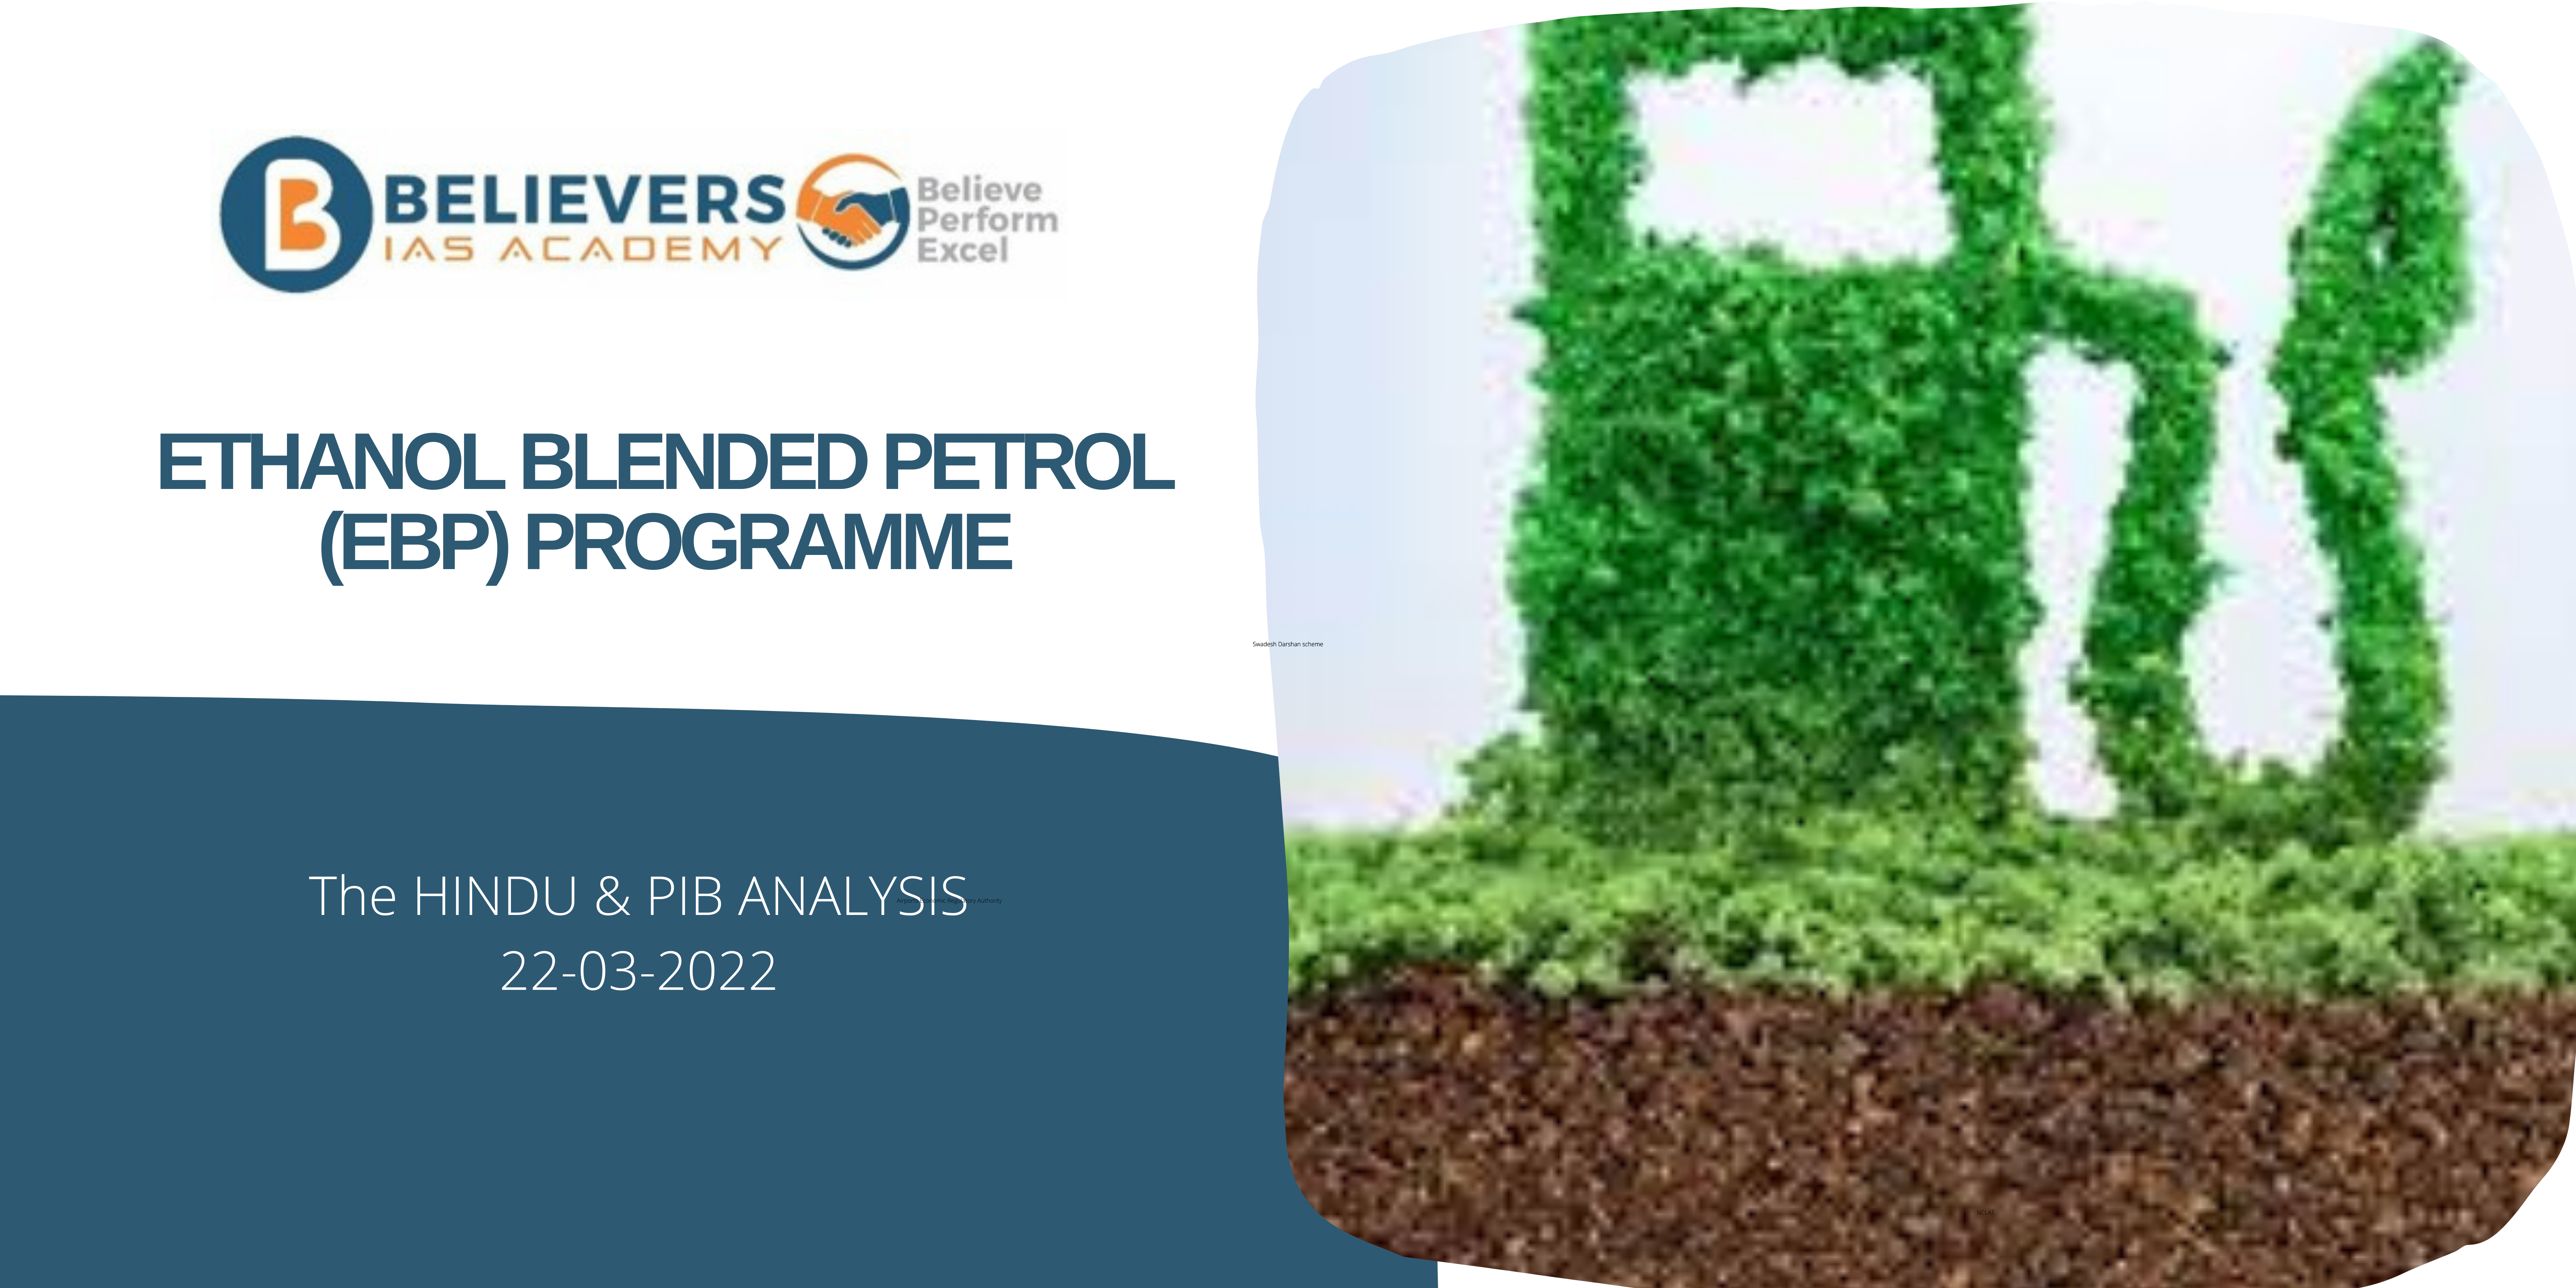 UPSC Current affairs - Ethanol Blended Petrol (EBP) Programme